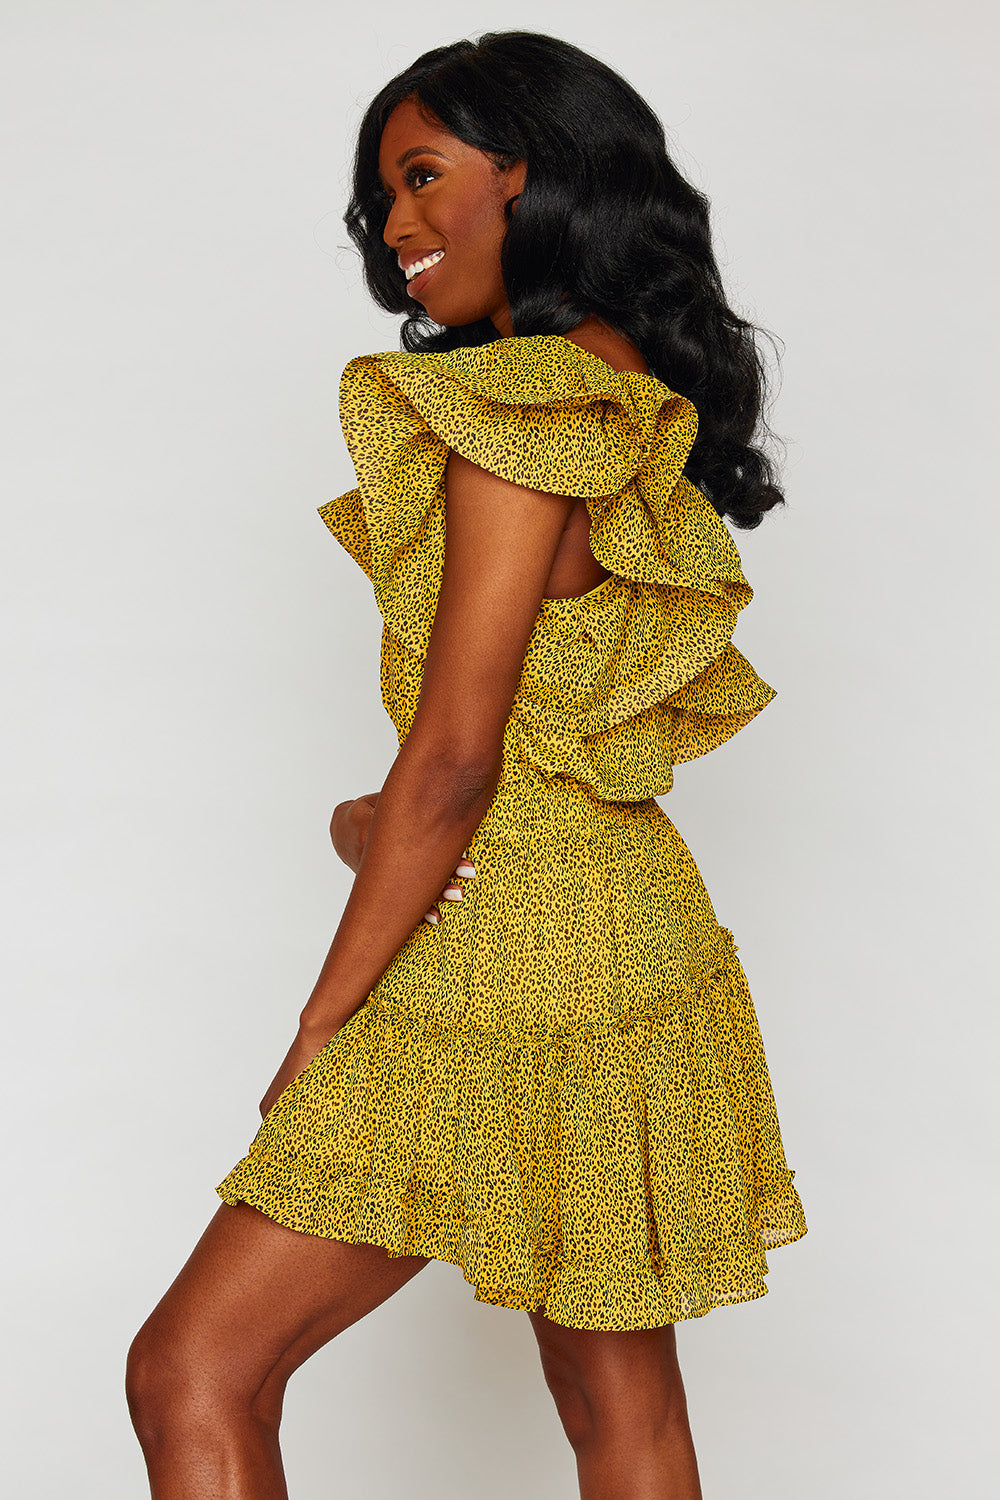 Sofia One Shoulder Ruffle Mini Dress- Yellow Animal Print